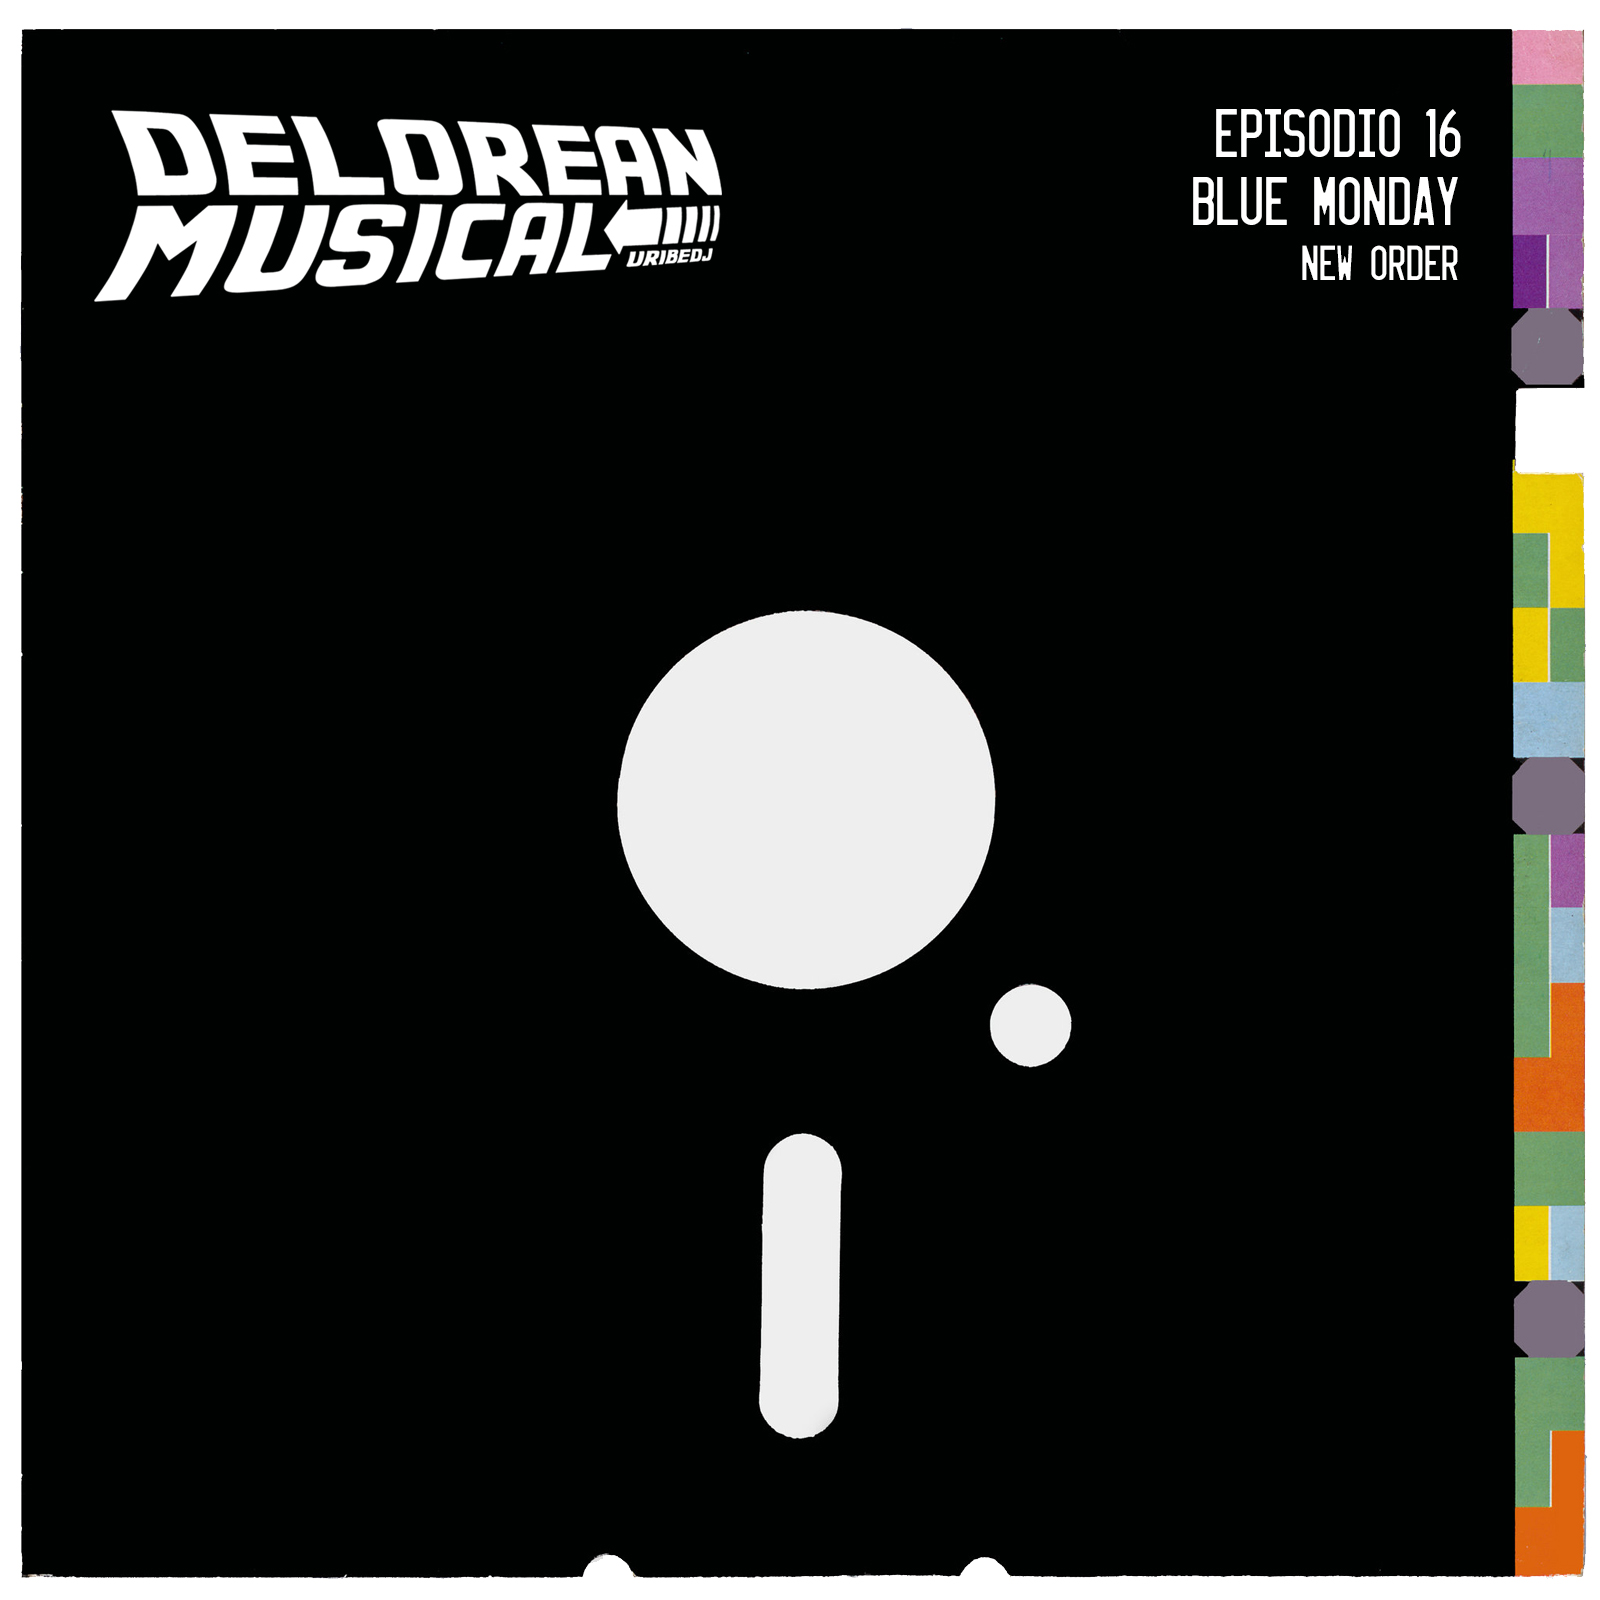 New Order - Blue Monday - Delorean musical ep.16